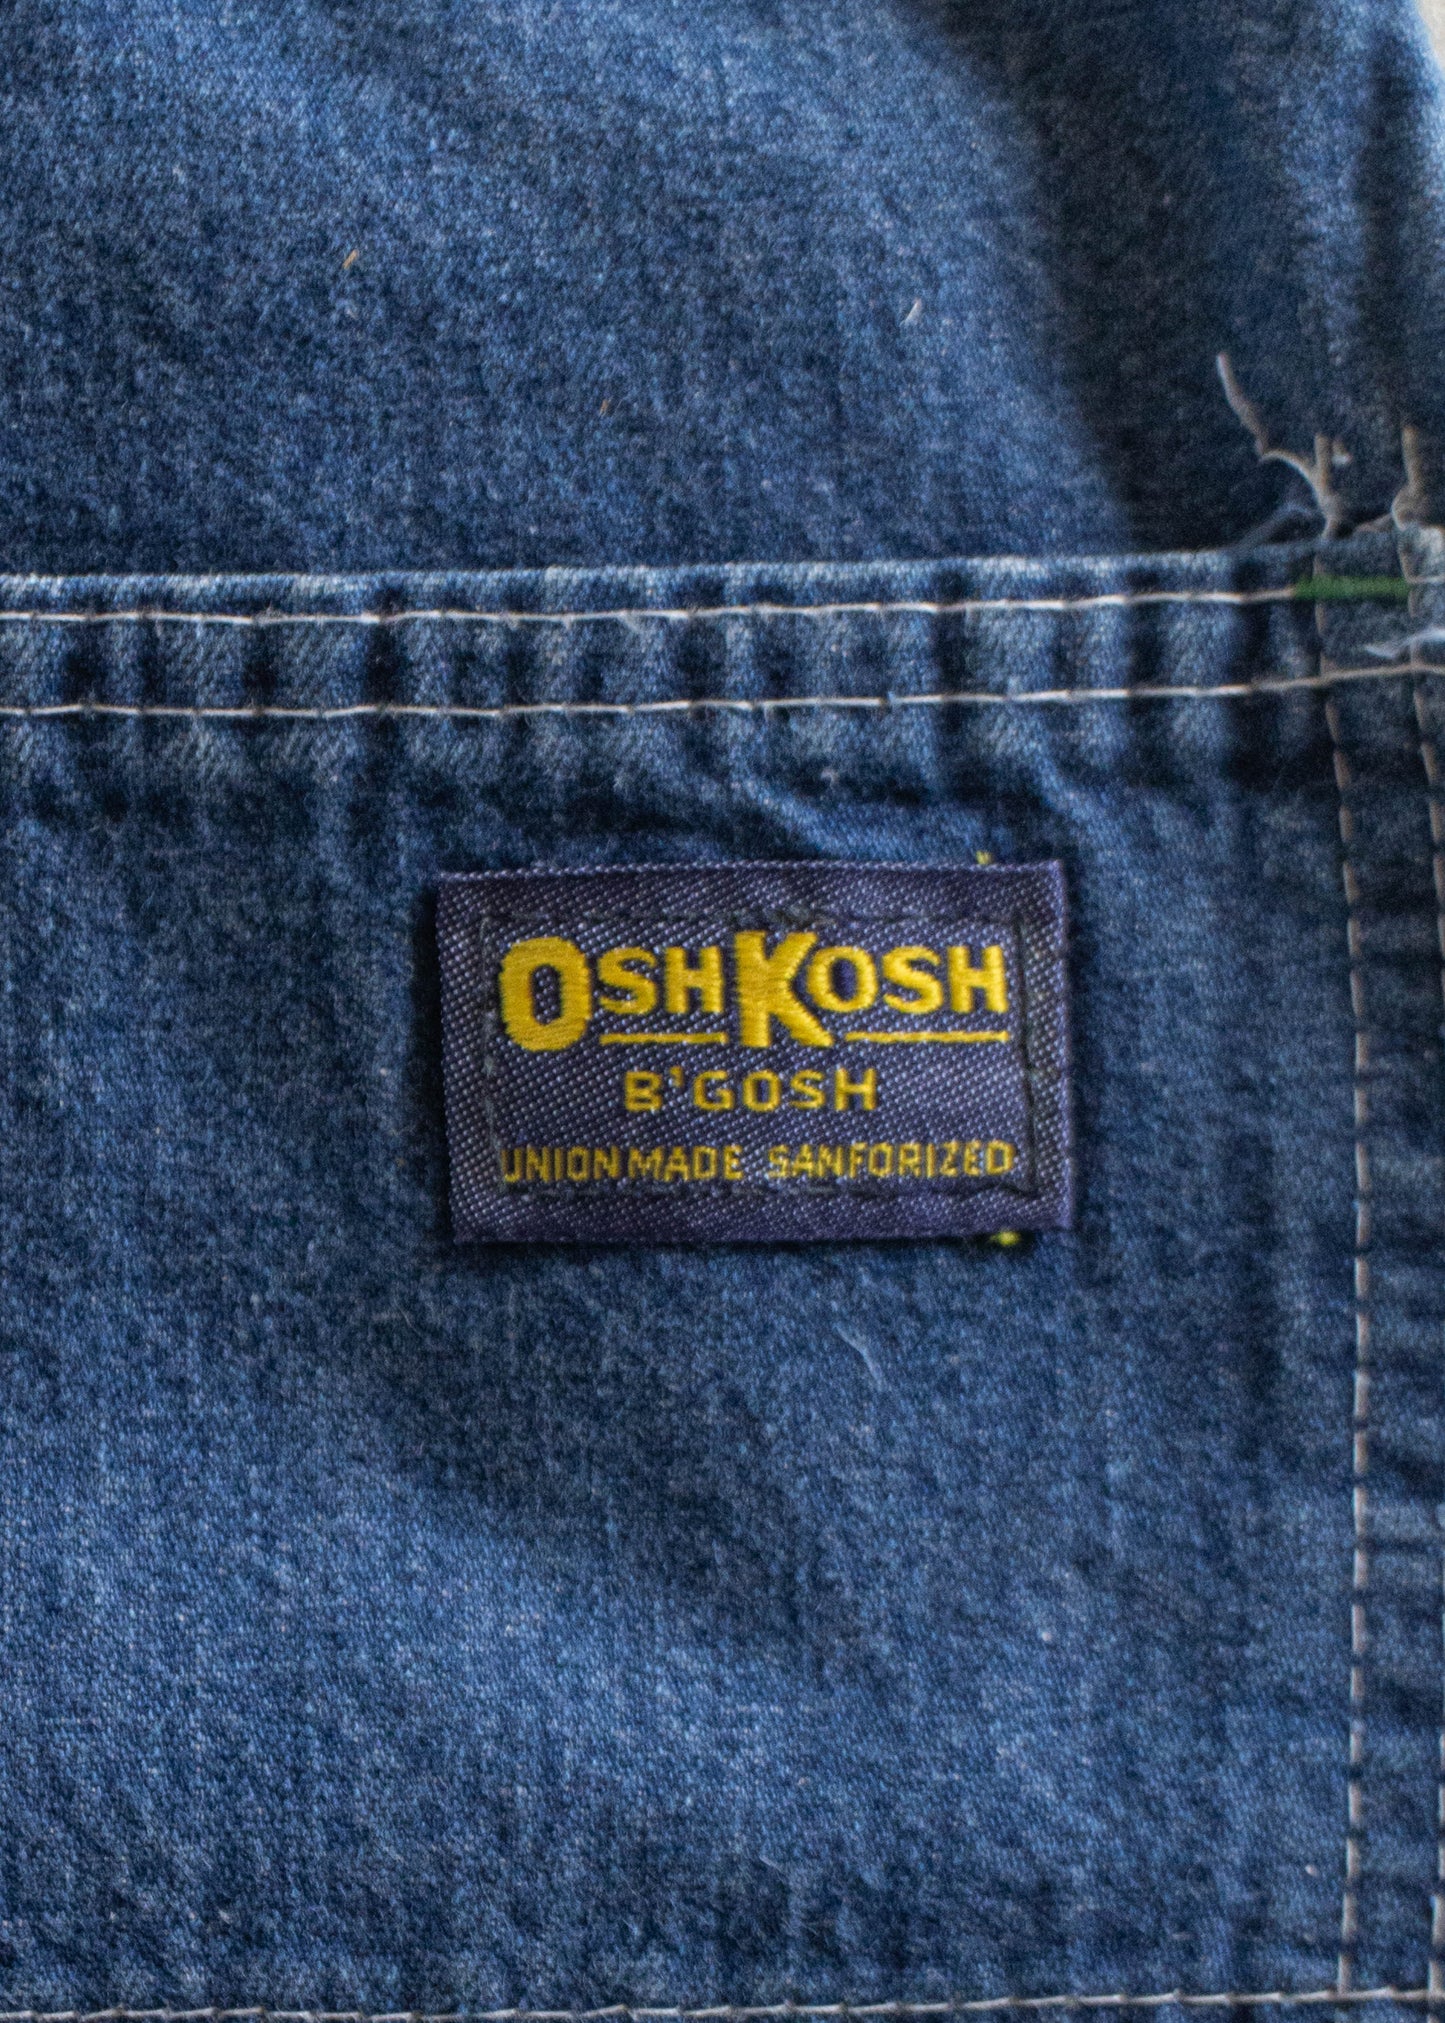 1970s Union Made OshKosh Denim Carpenter Pants Size Women's 40 Men's 42